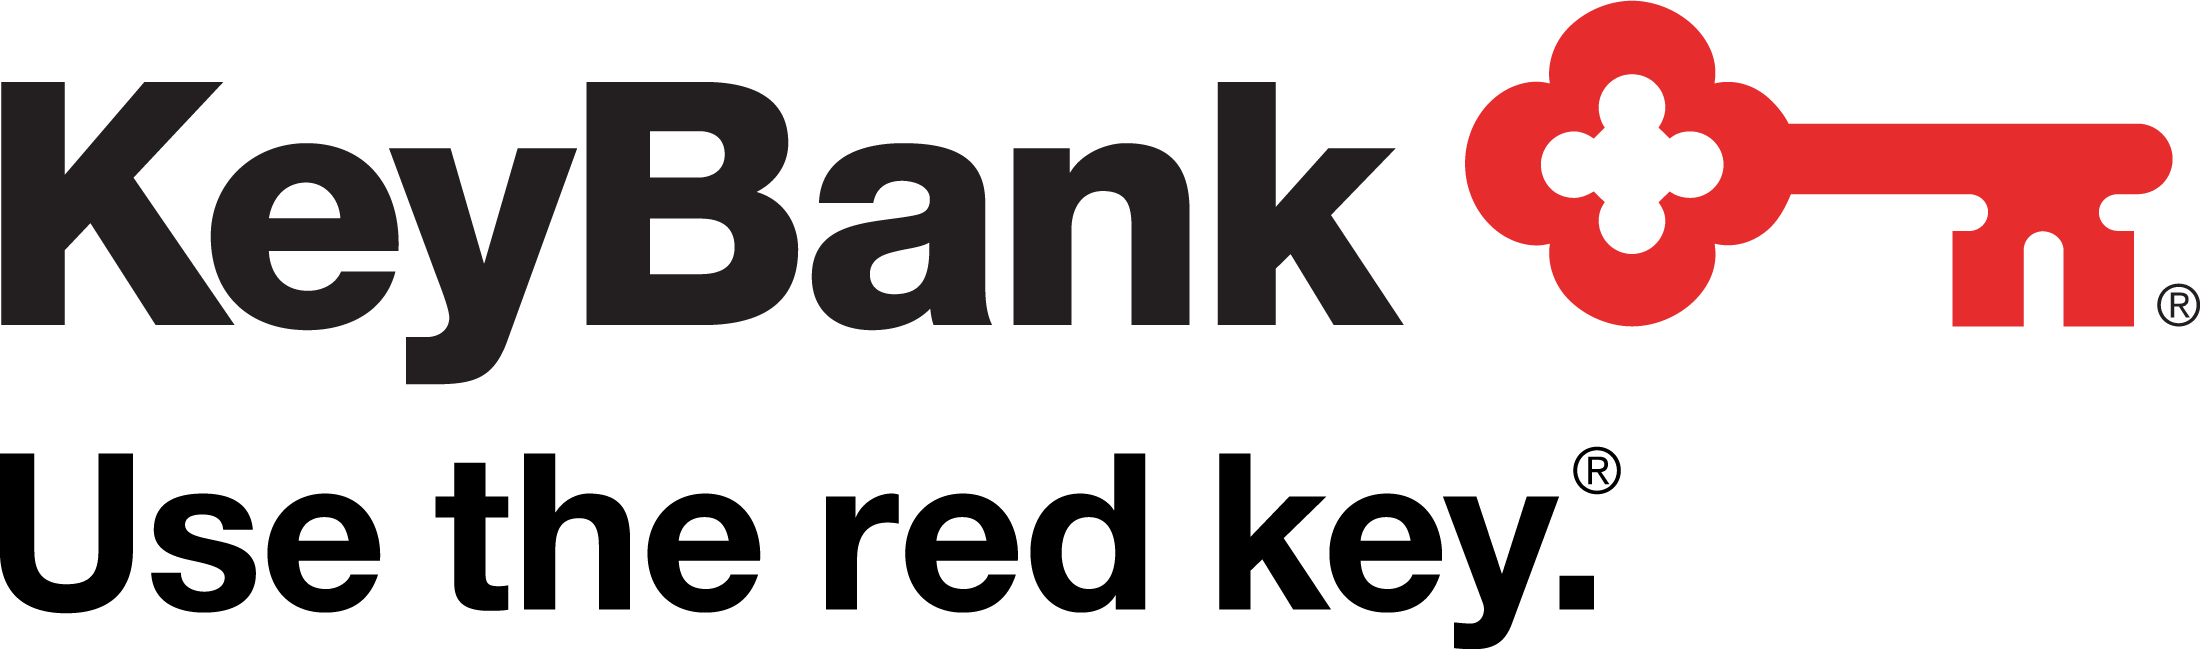 keybank logo - Gaining efficiencies with AR automation